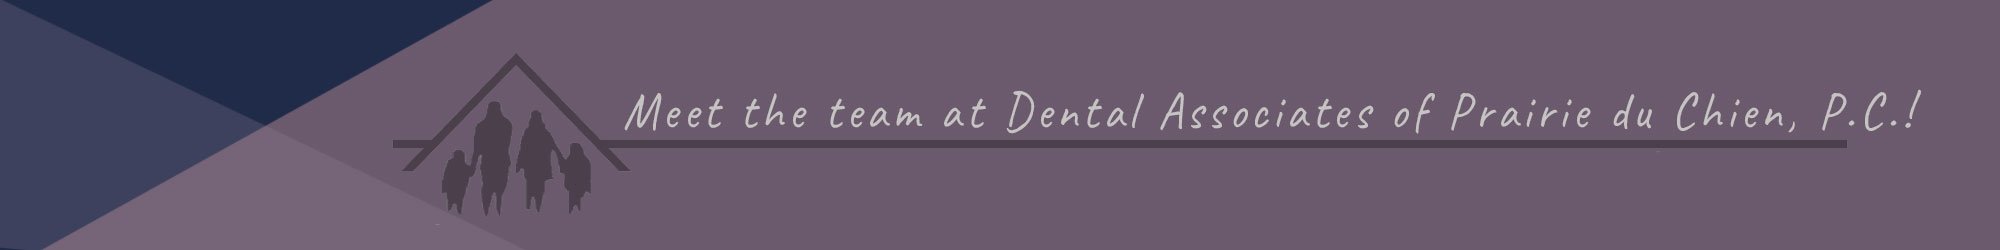 Our Team - Brittany - Dental Hygienist